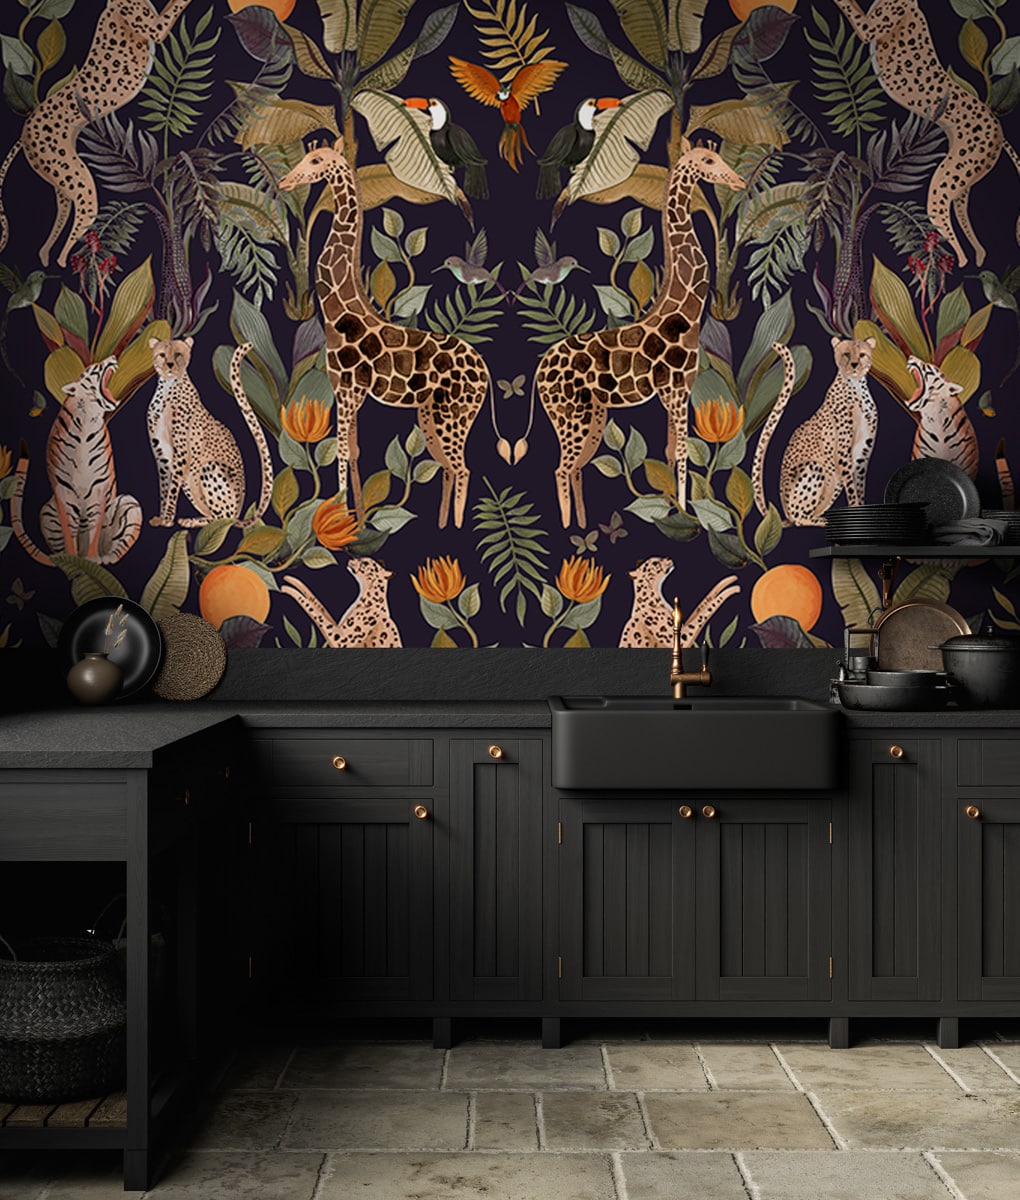 Black kitchen interior with sink, furniture, dishes and decor. 3d render illustration mock up.